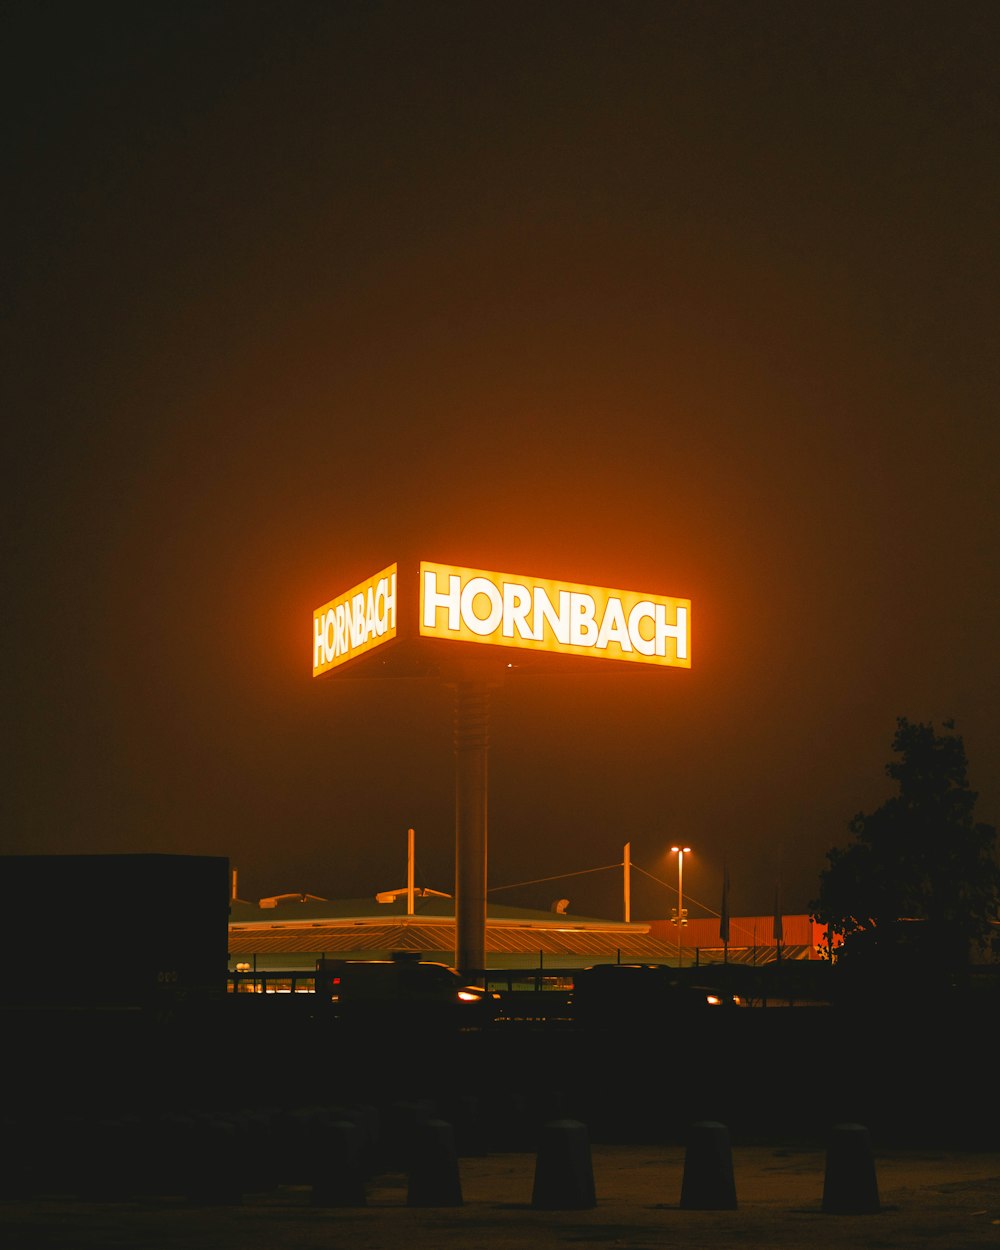 a large hornback gas station sign lit up at night